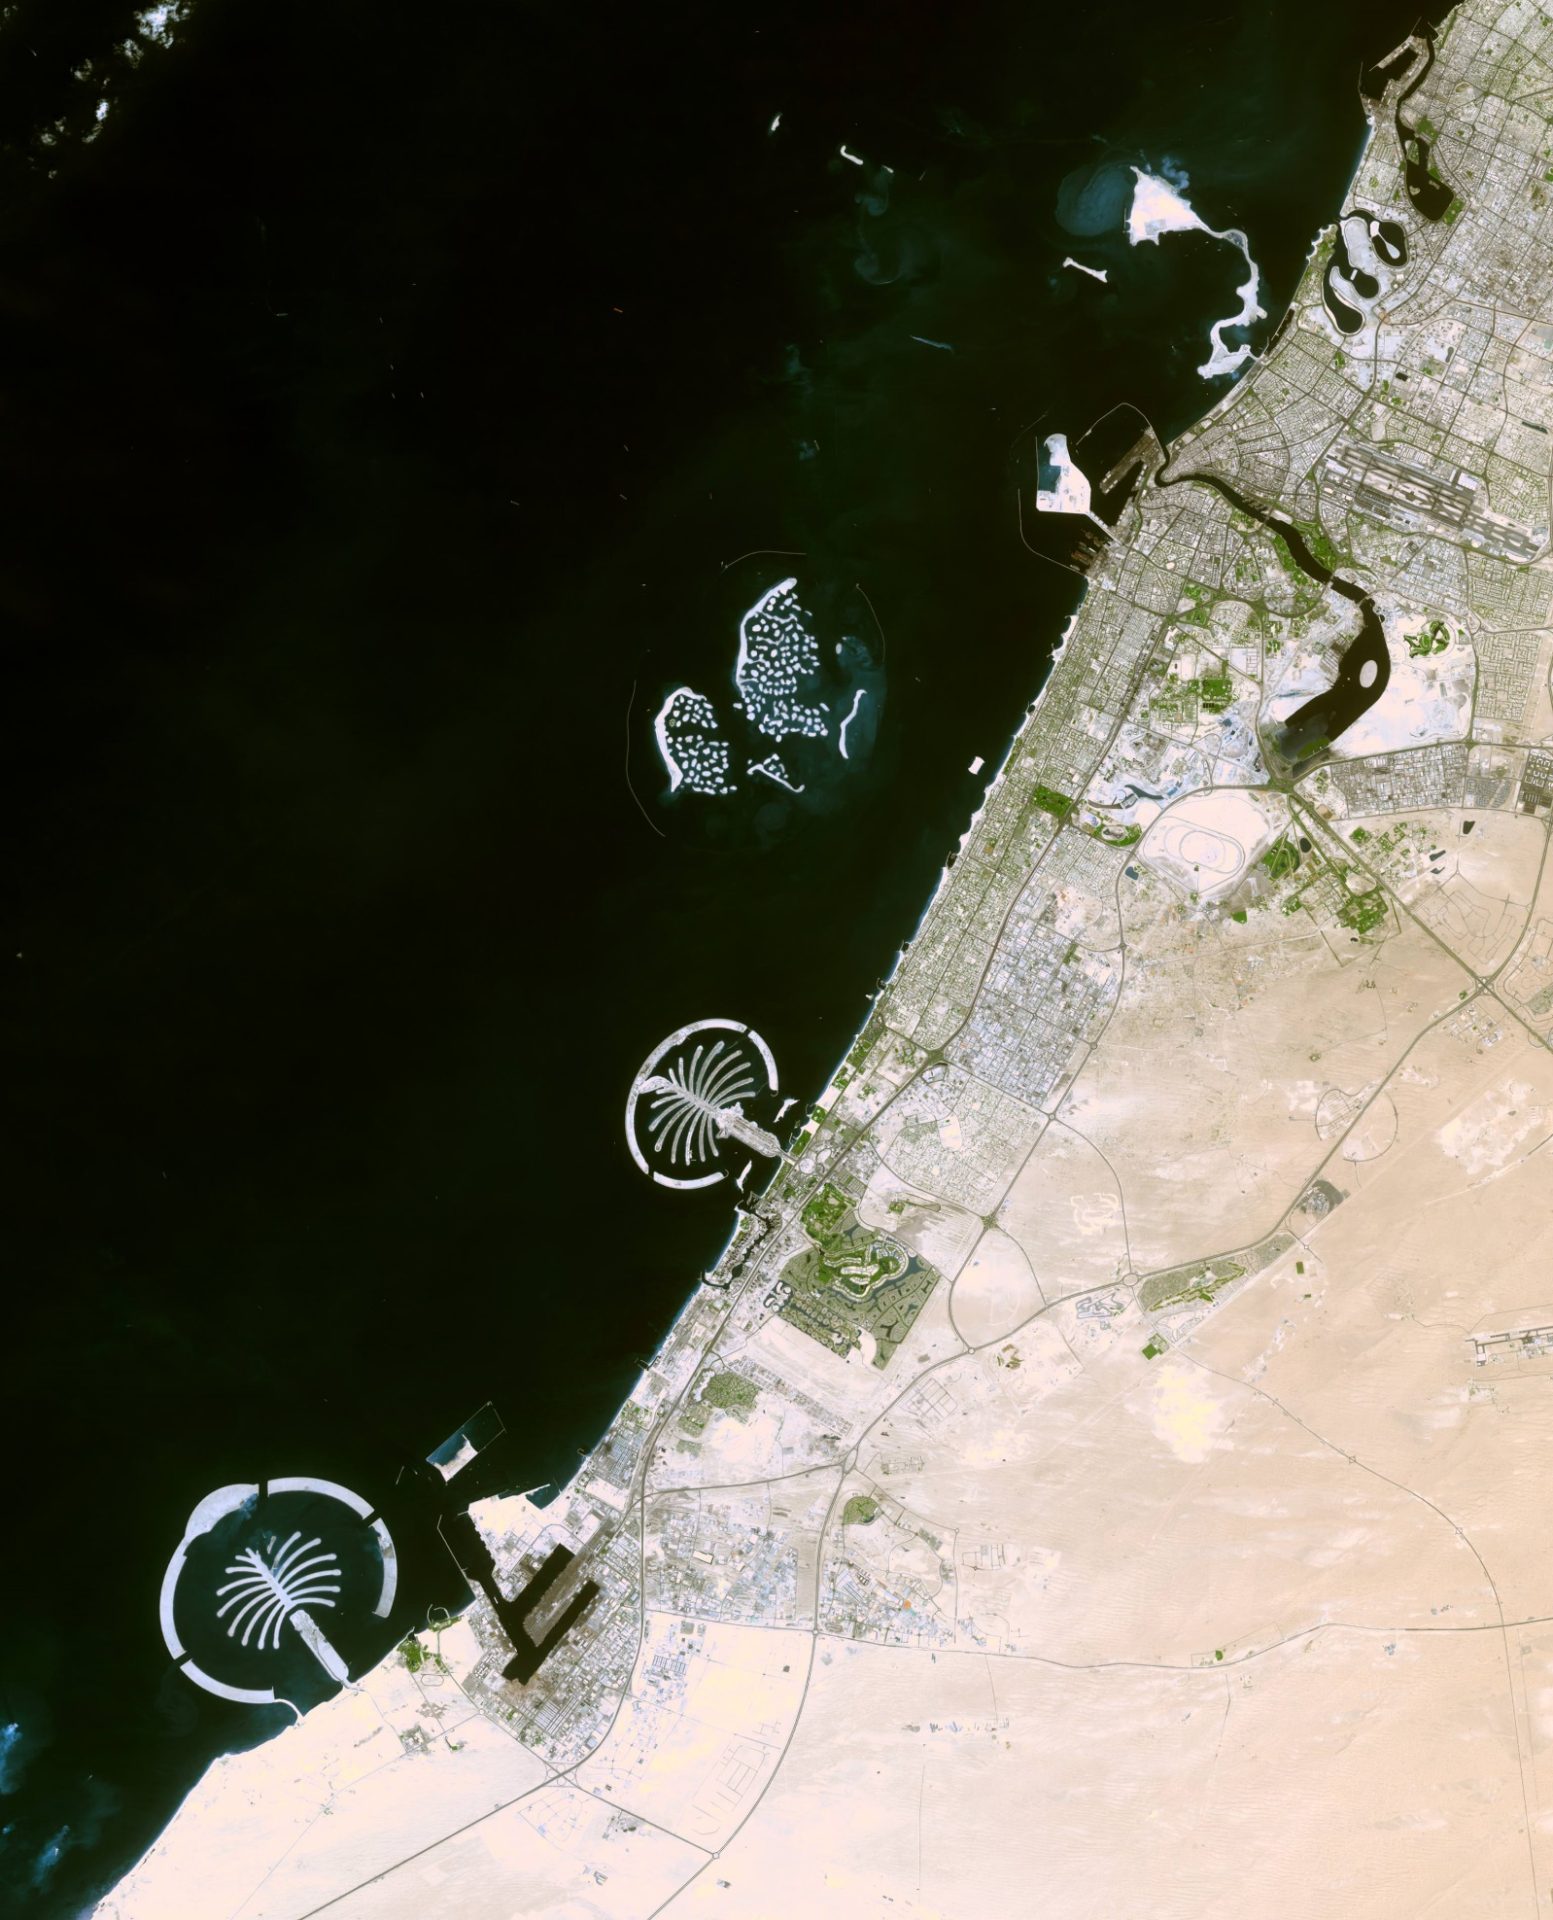 Dubai Palm Islands from space